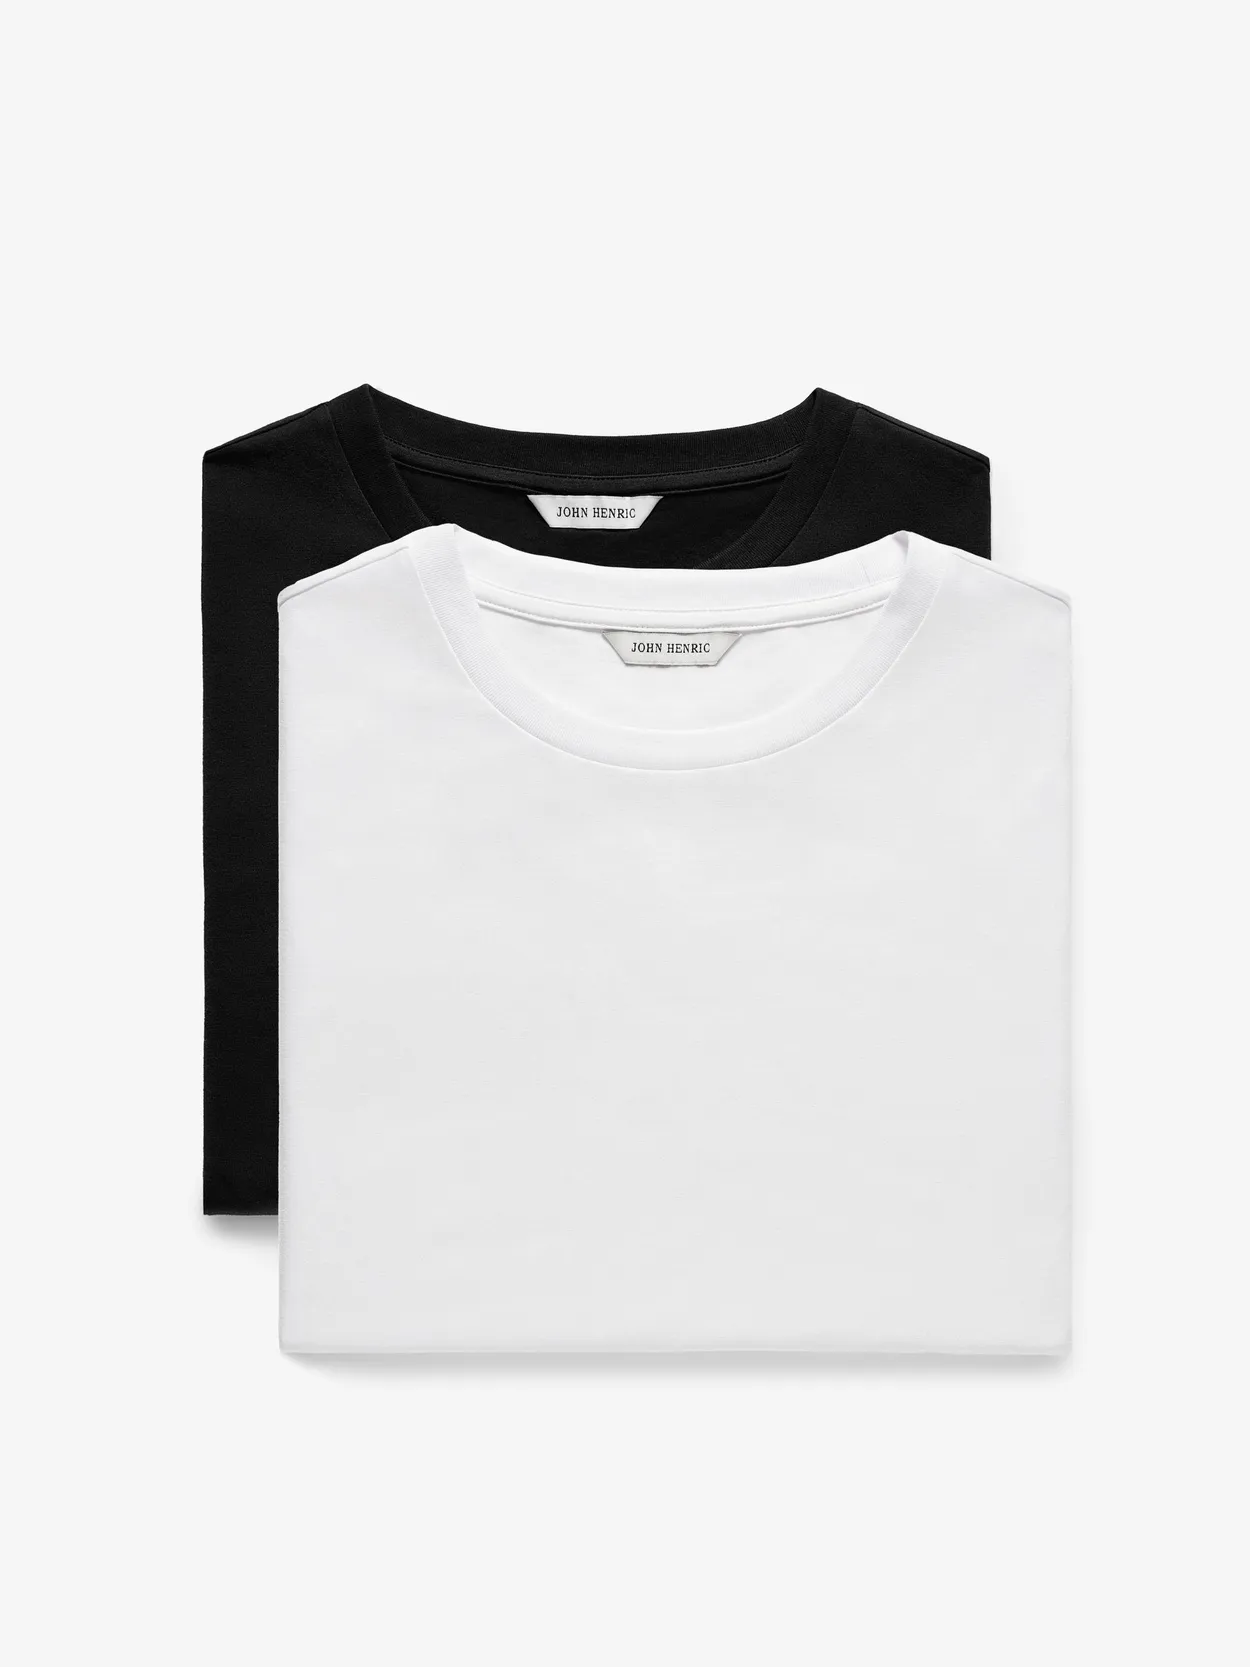 2-Pack White & Black T-shirts